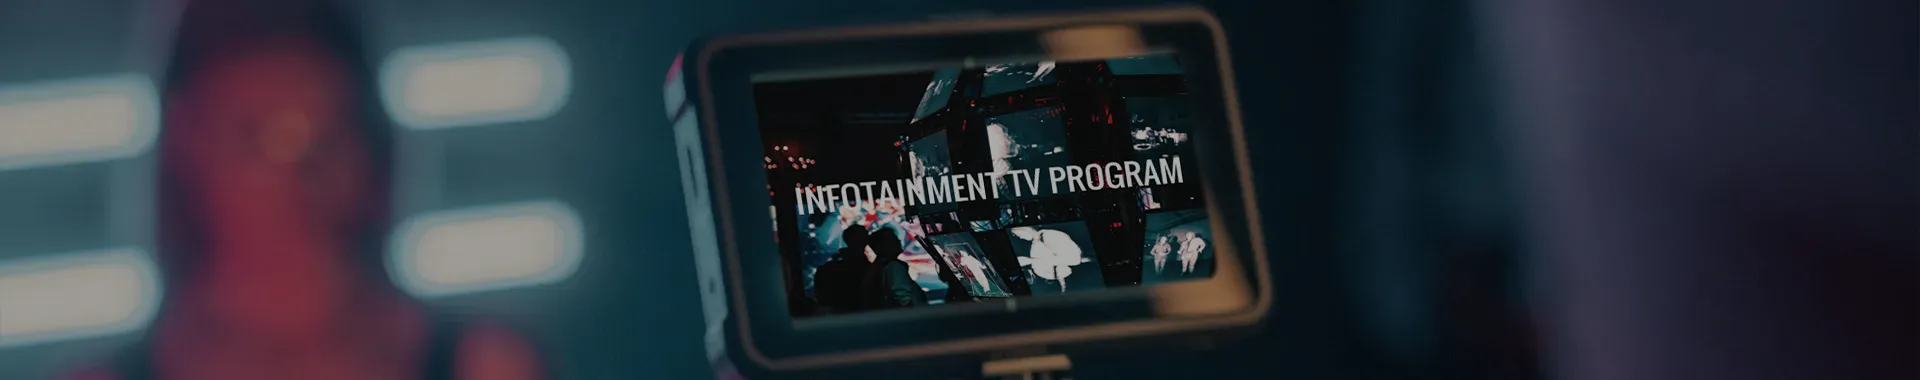 INFOTAINMENT TV PROGRAM